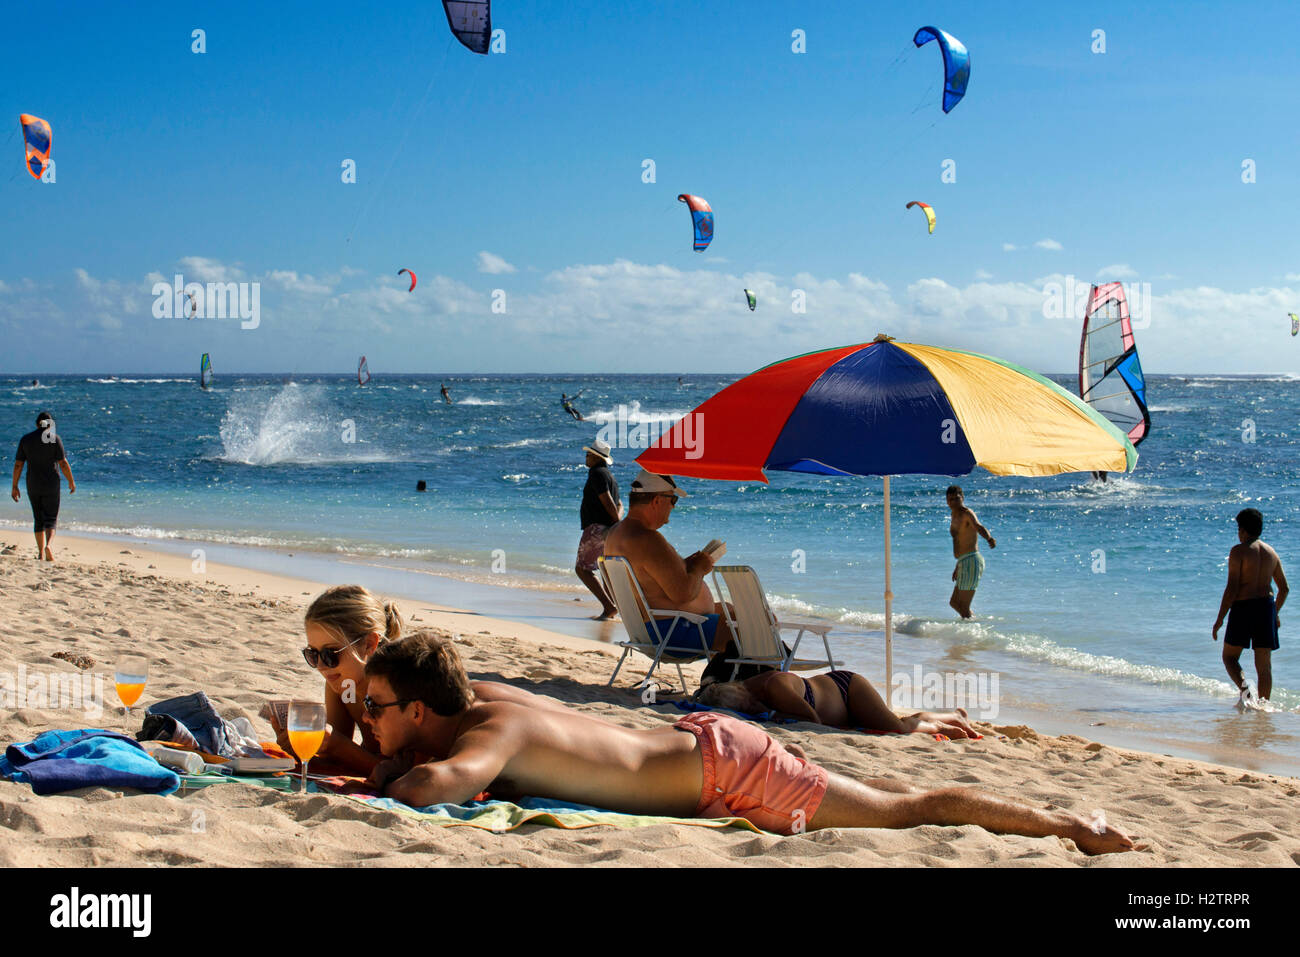 Sunbath and Water sports in Le Morne public beach, Mauritius. Stock Photo